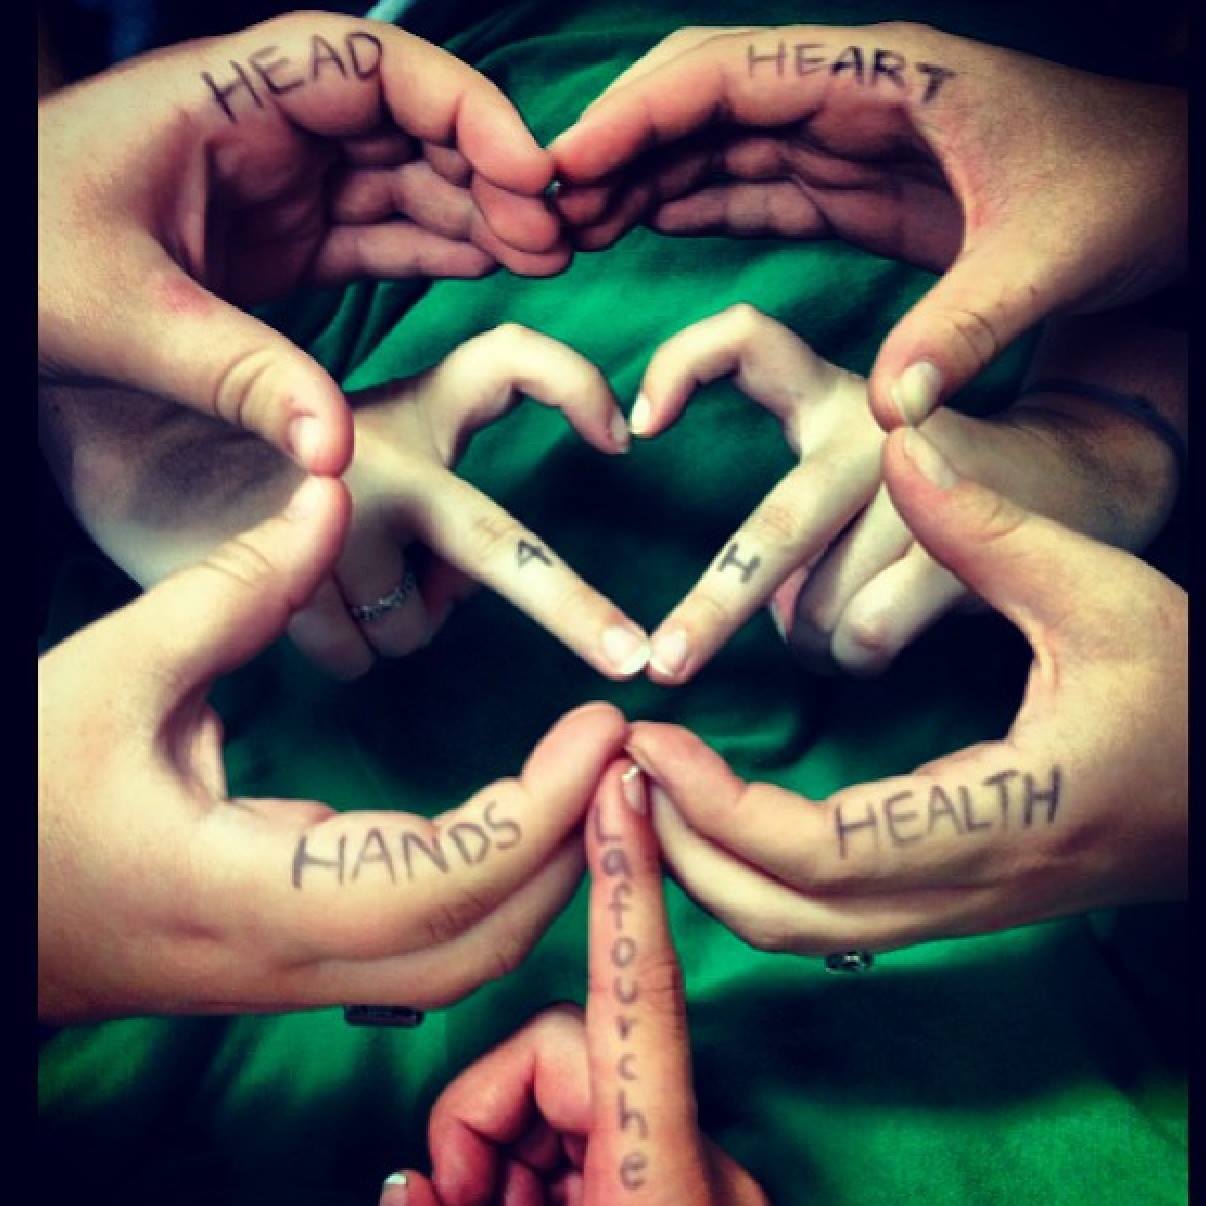 4-h-hearts-of-hands-photo.jpg